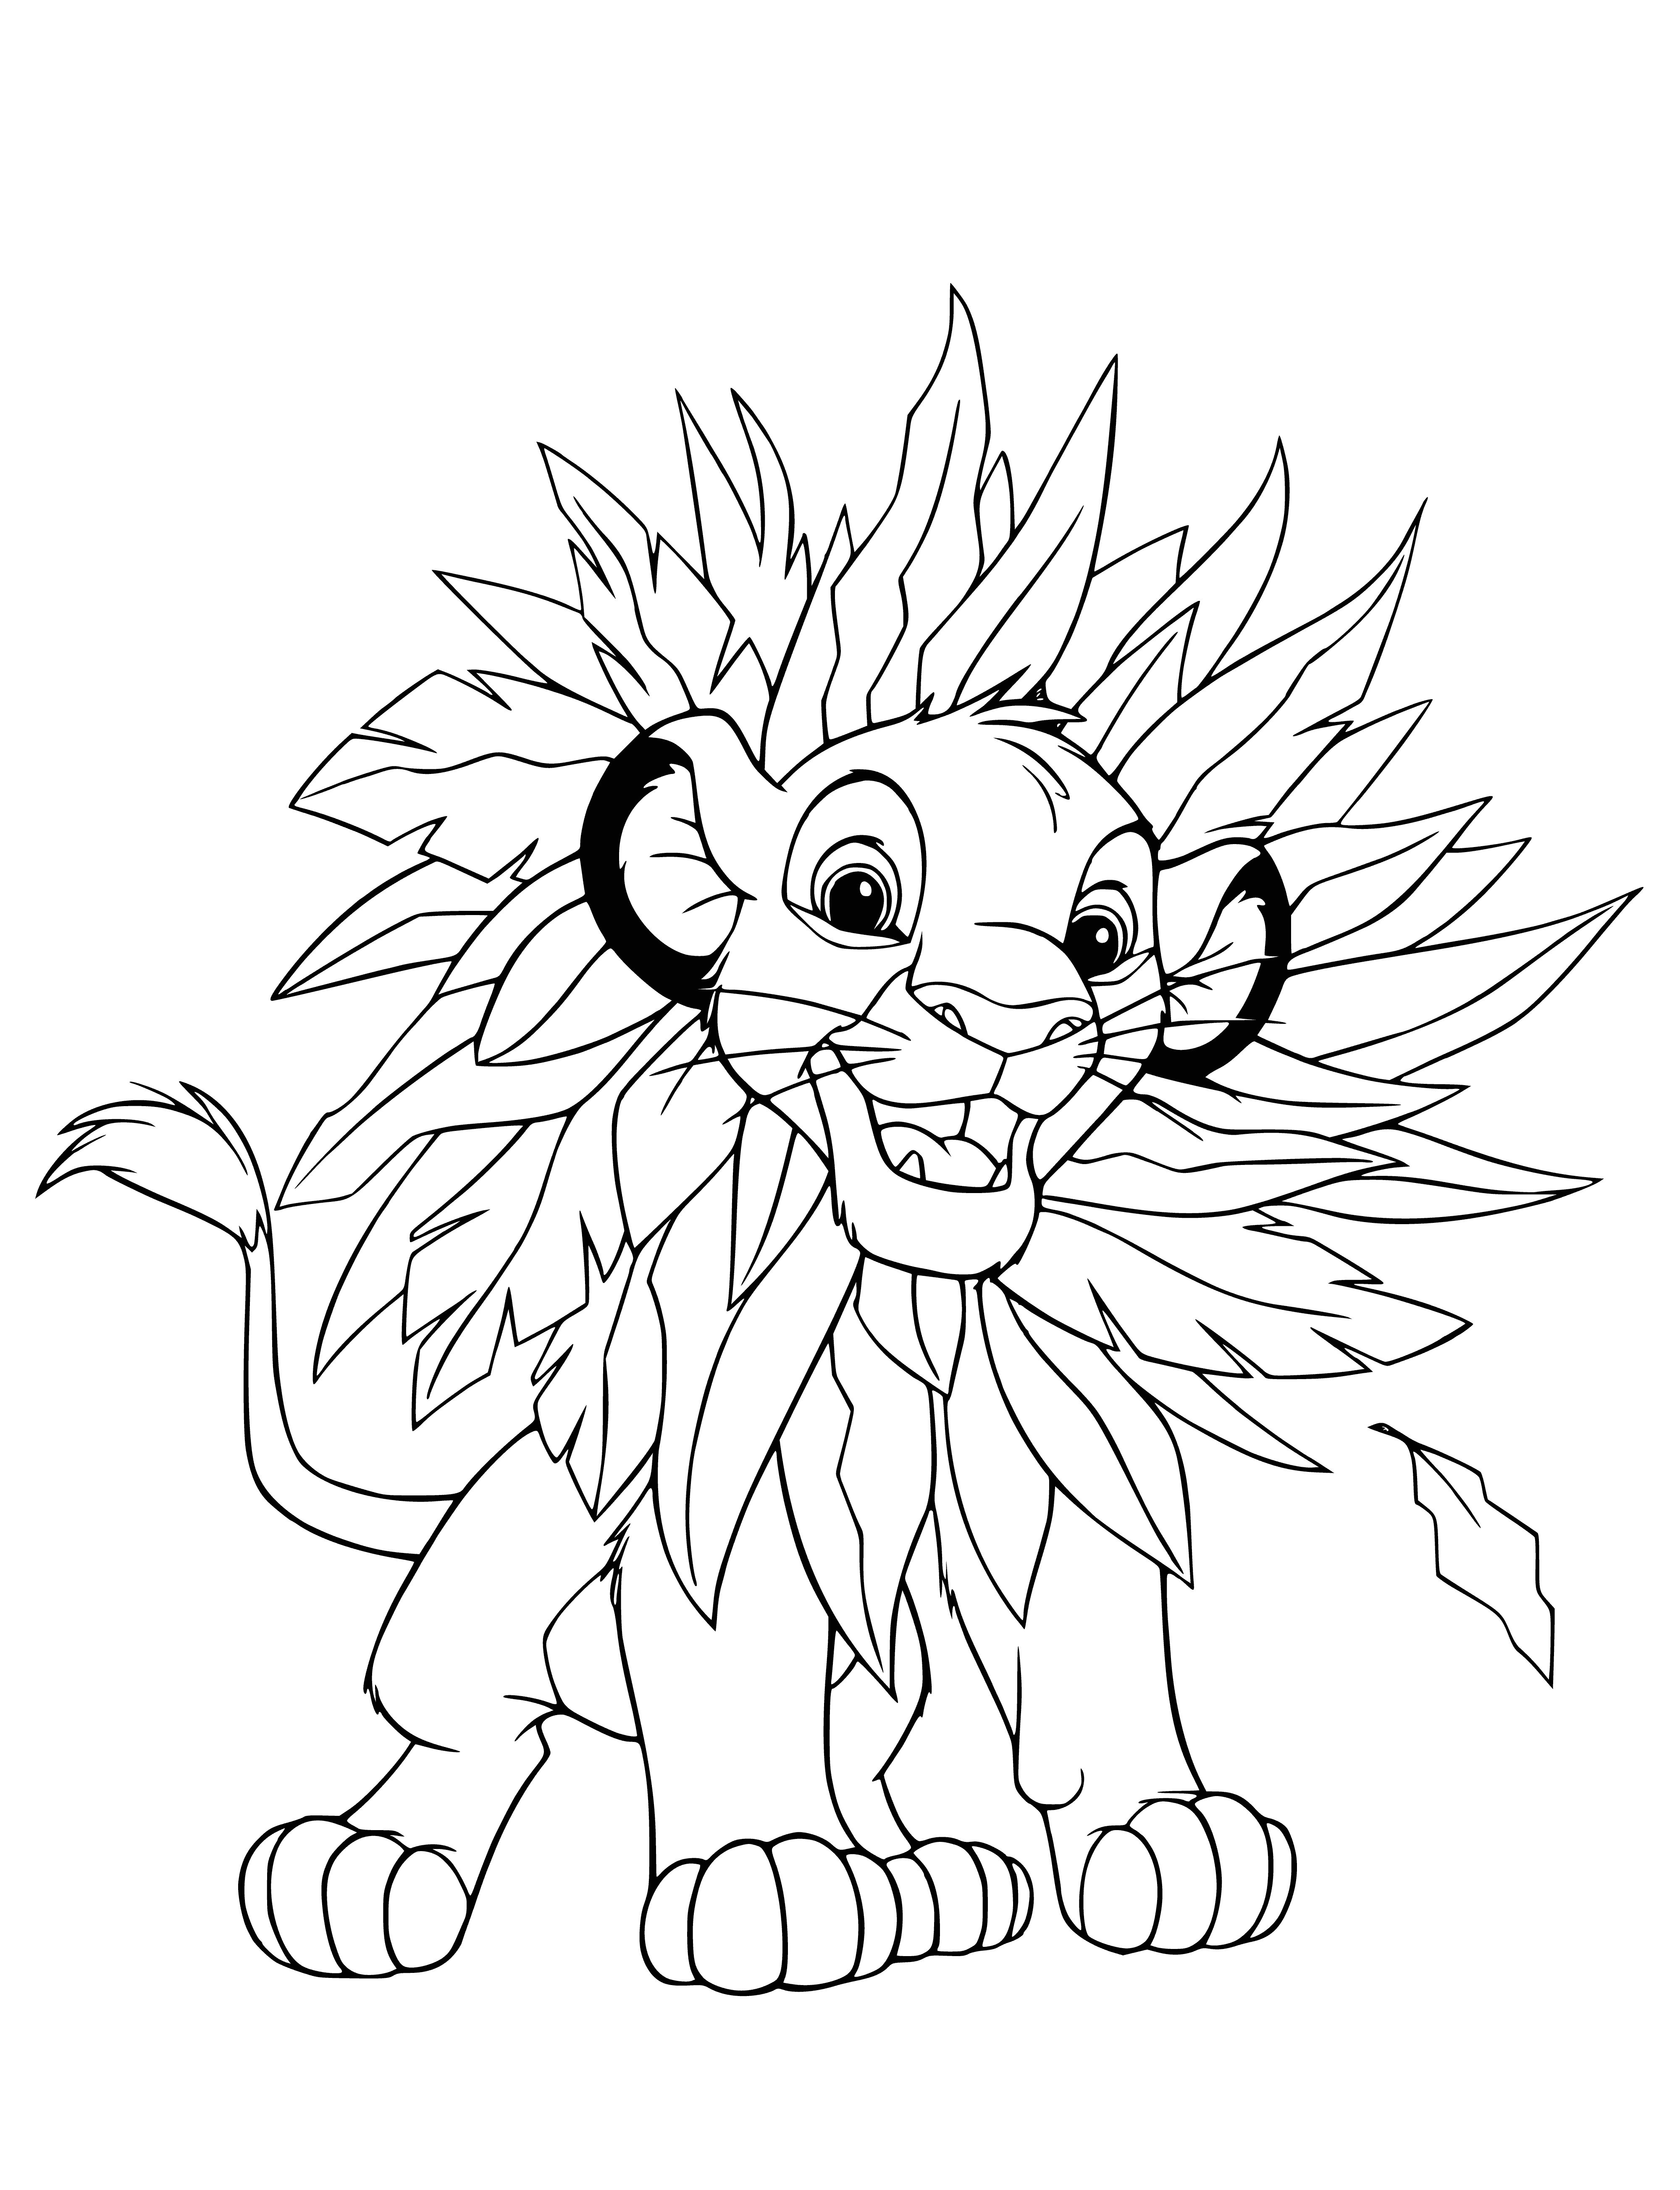 Mane for a lion cub coloring page